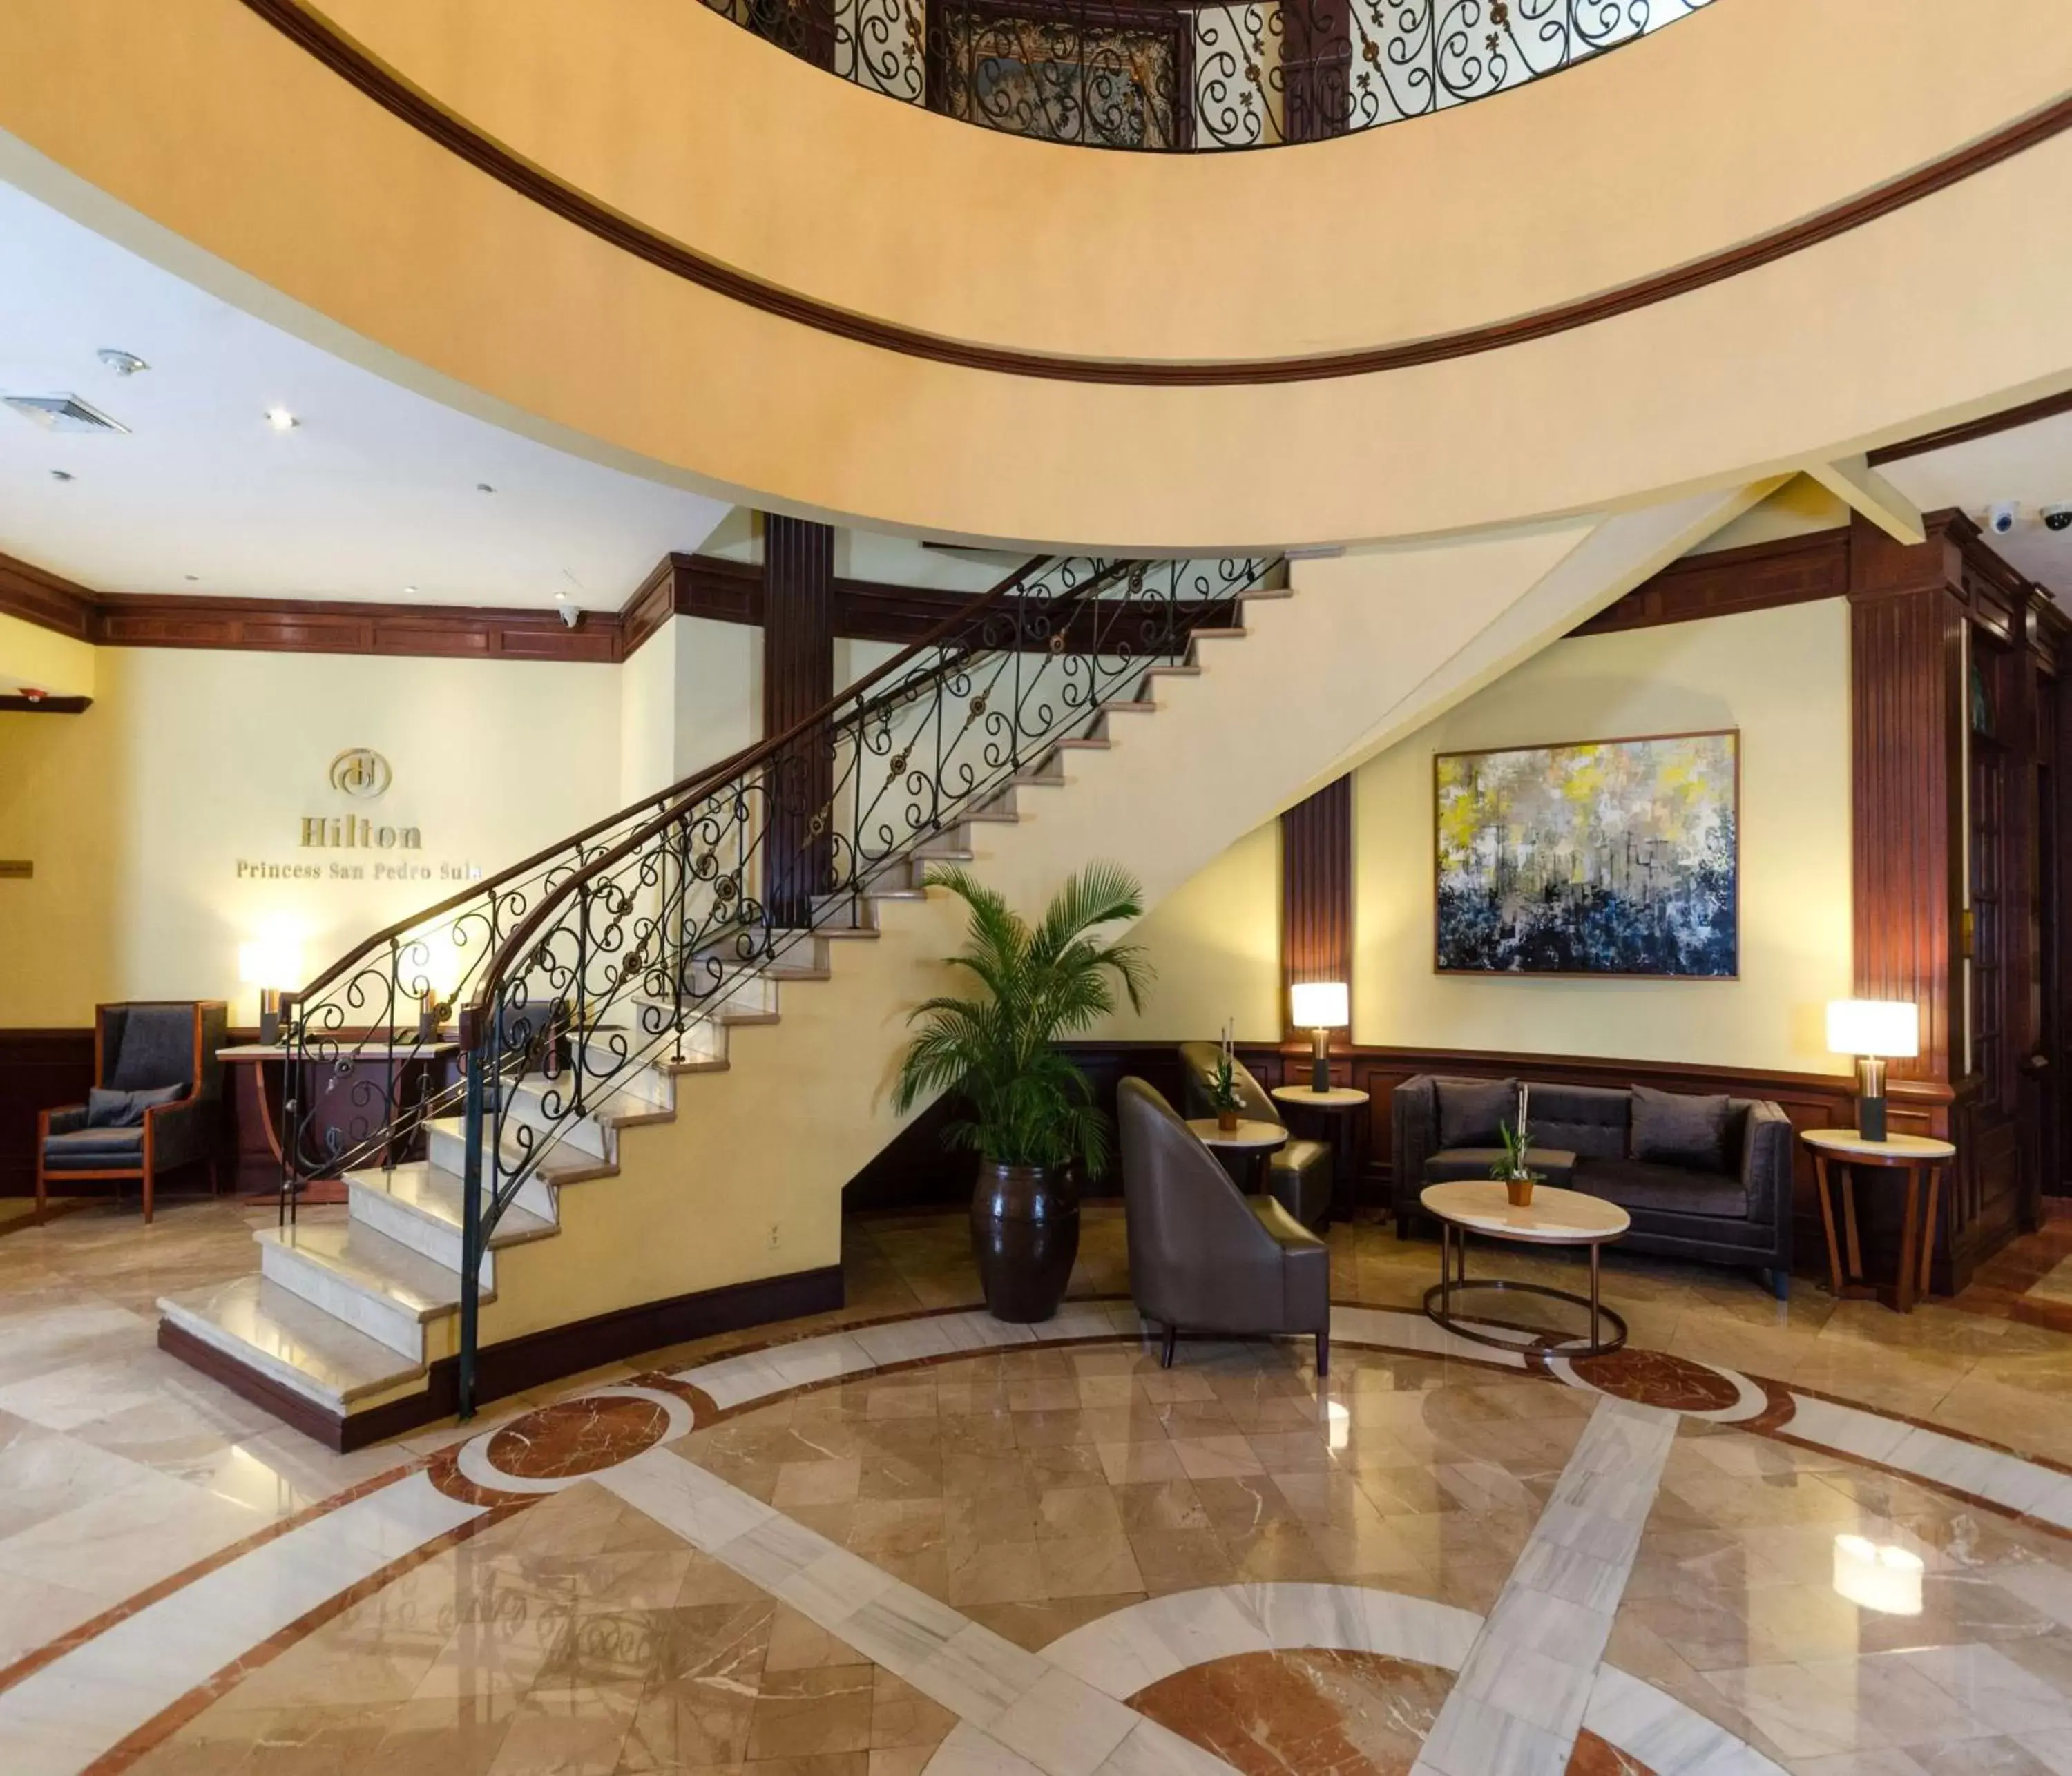 Lobby or reception, Lobby/Reception in Hilton Princess San Pedro Sula